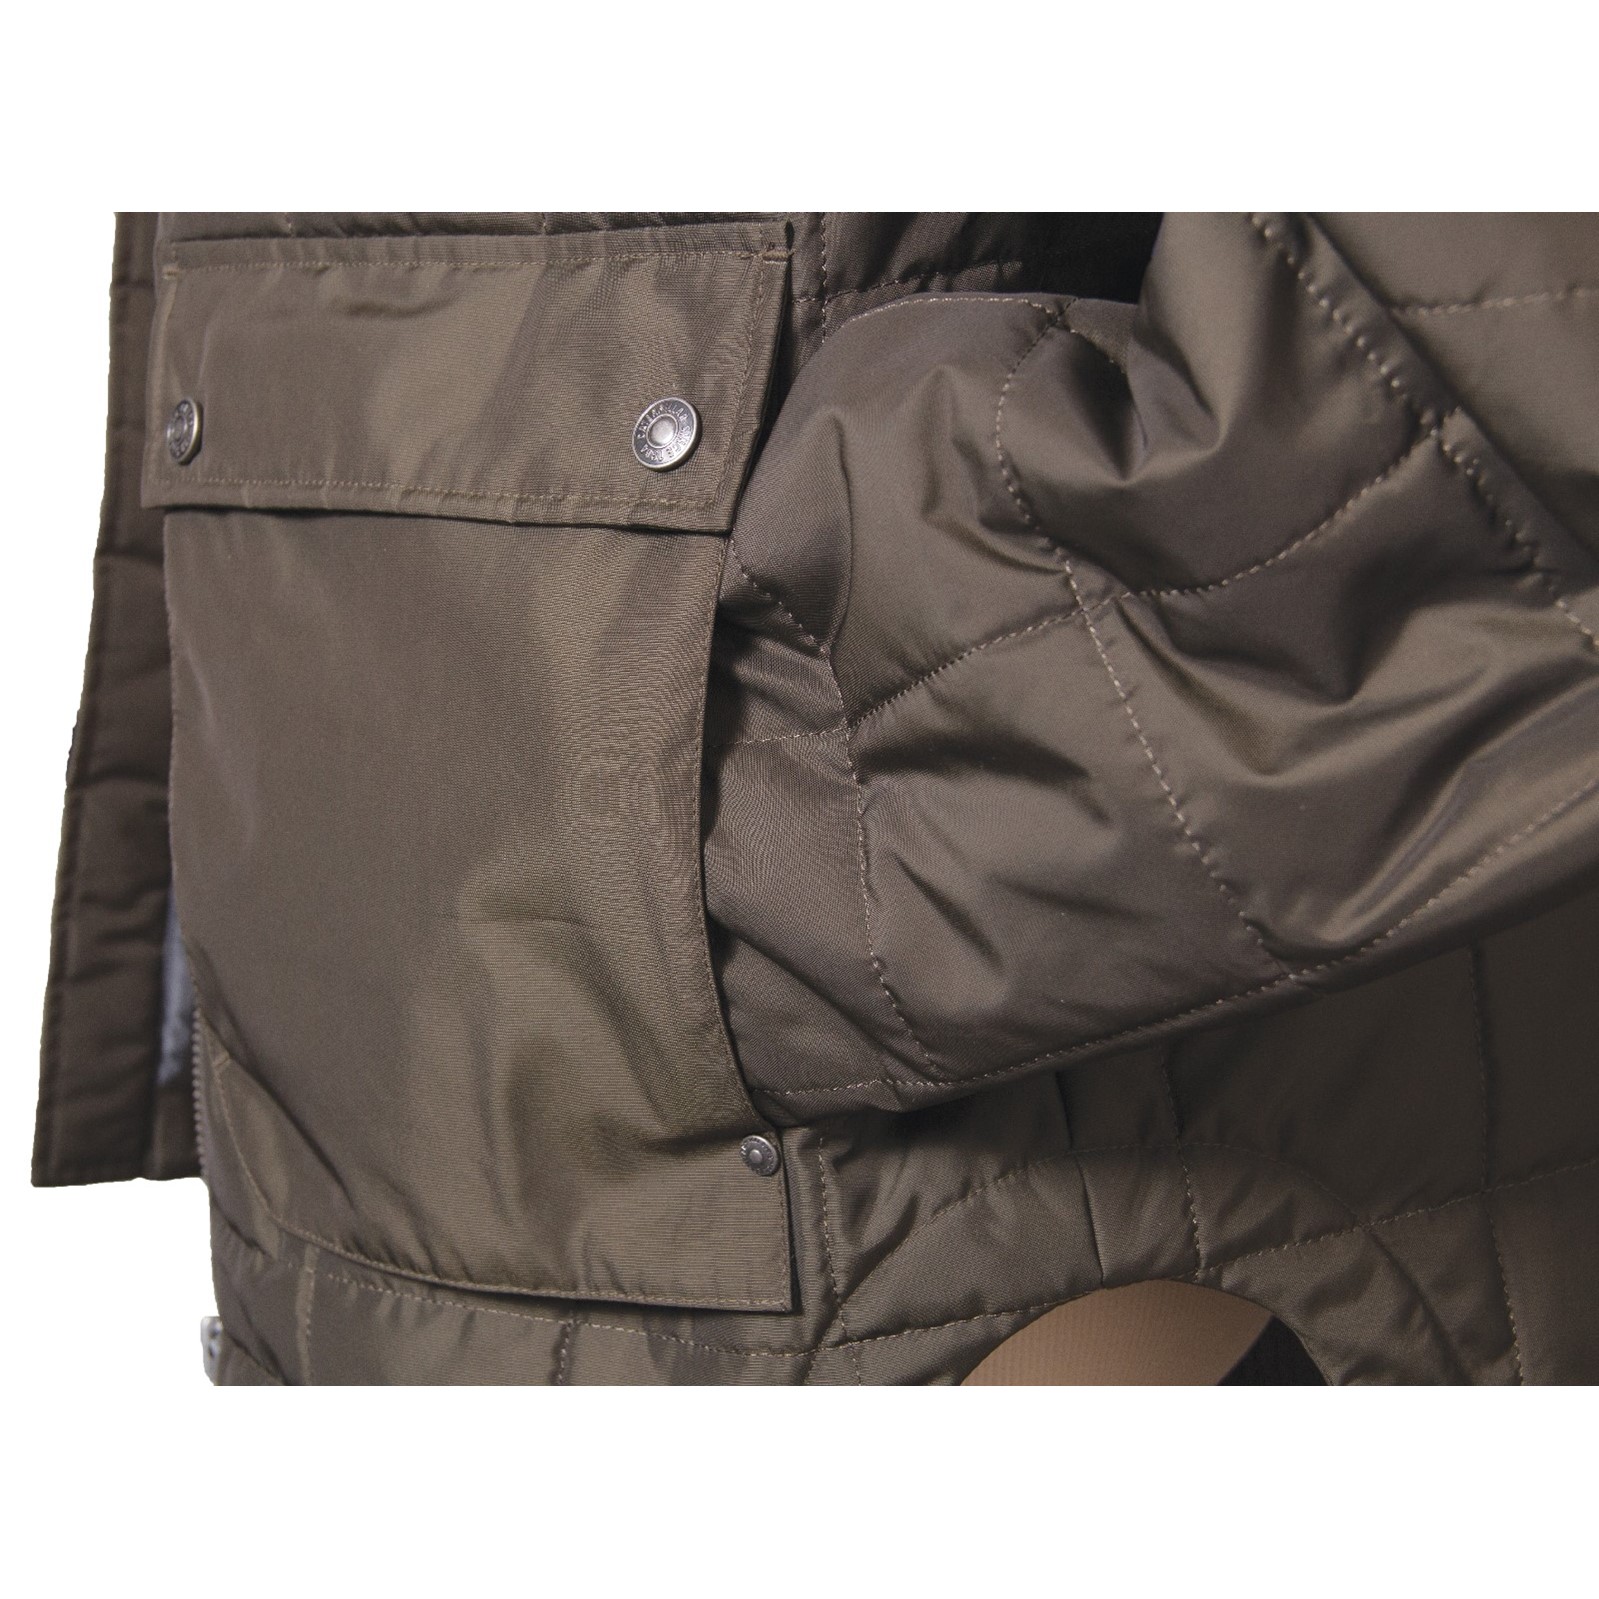 Terrain Jacket - First Safety